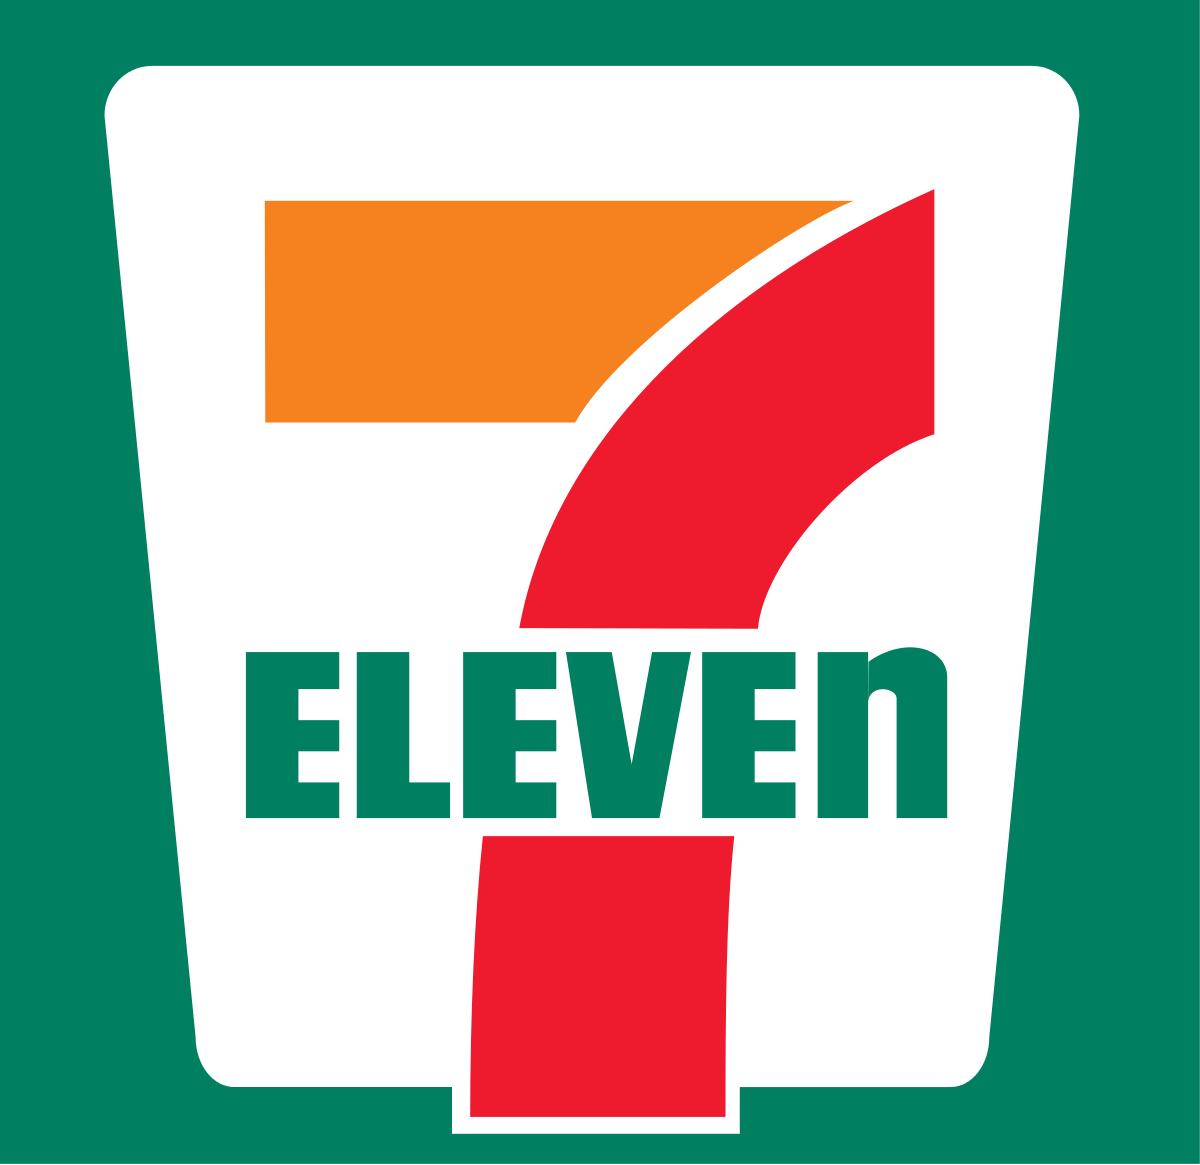 Eleven Letter Logo - The 